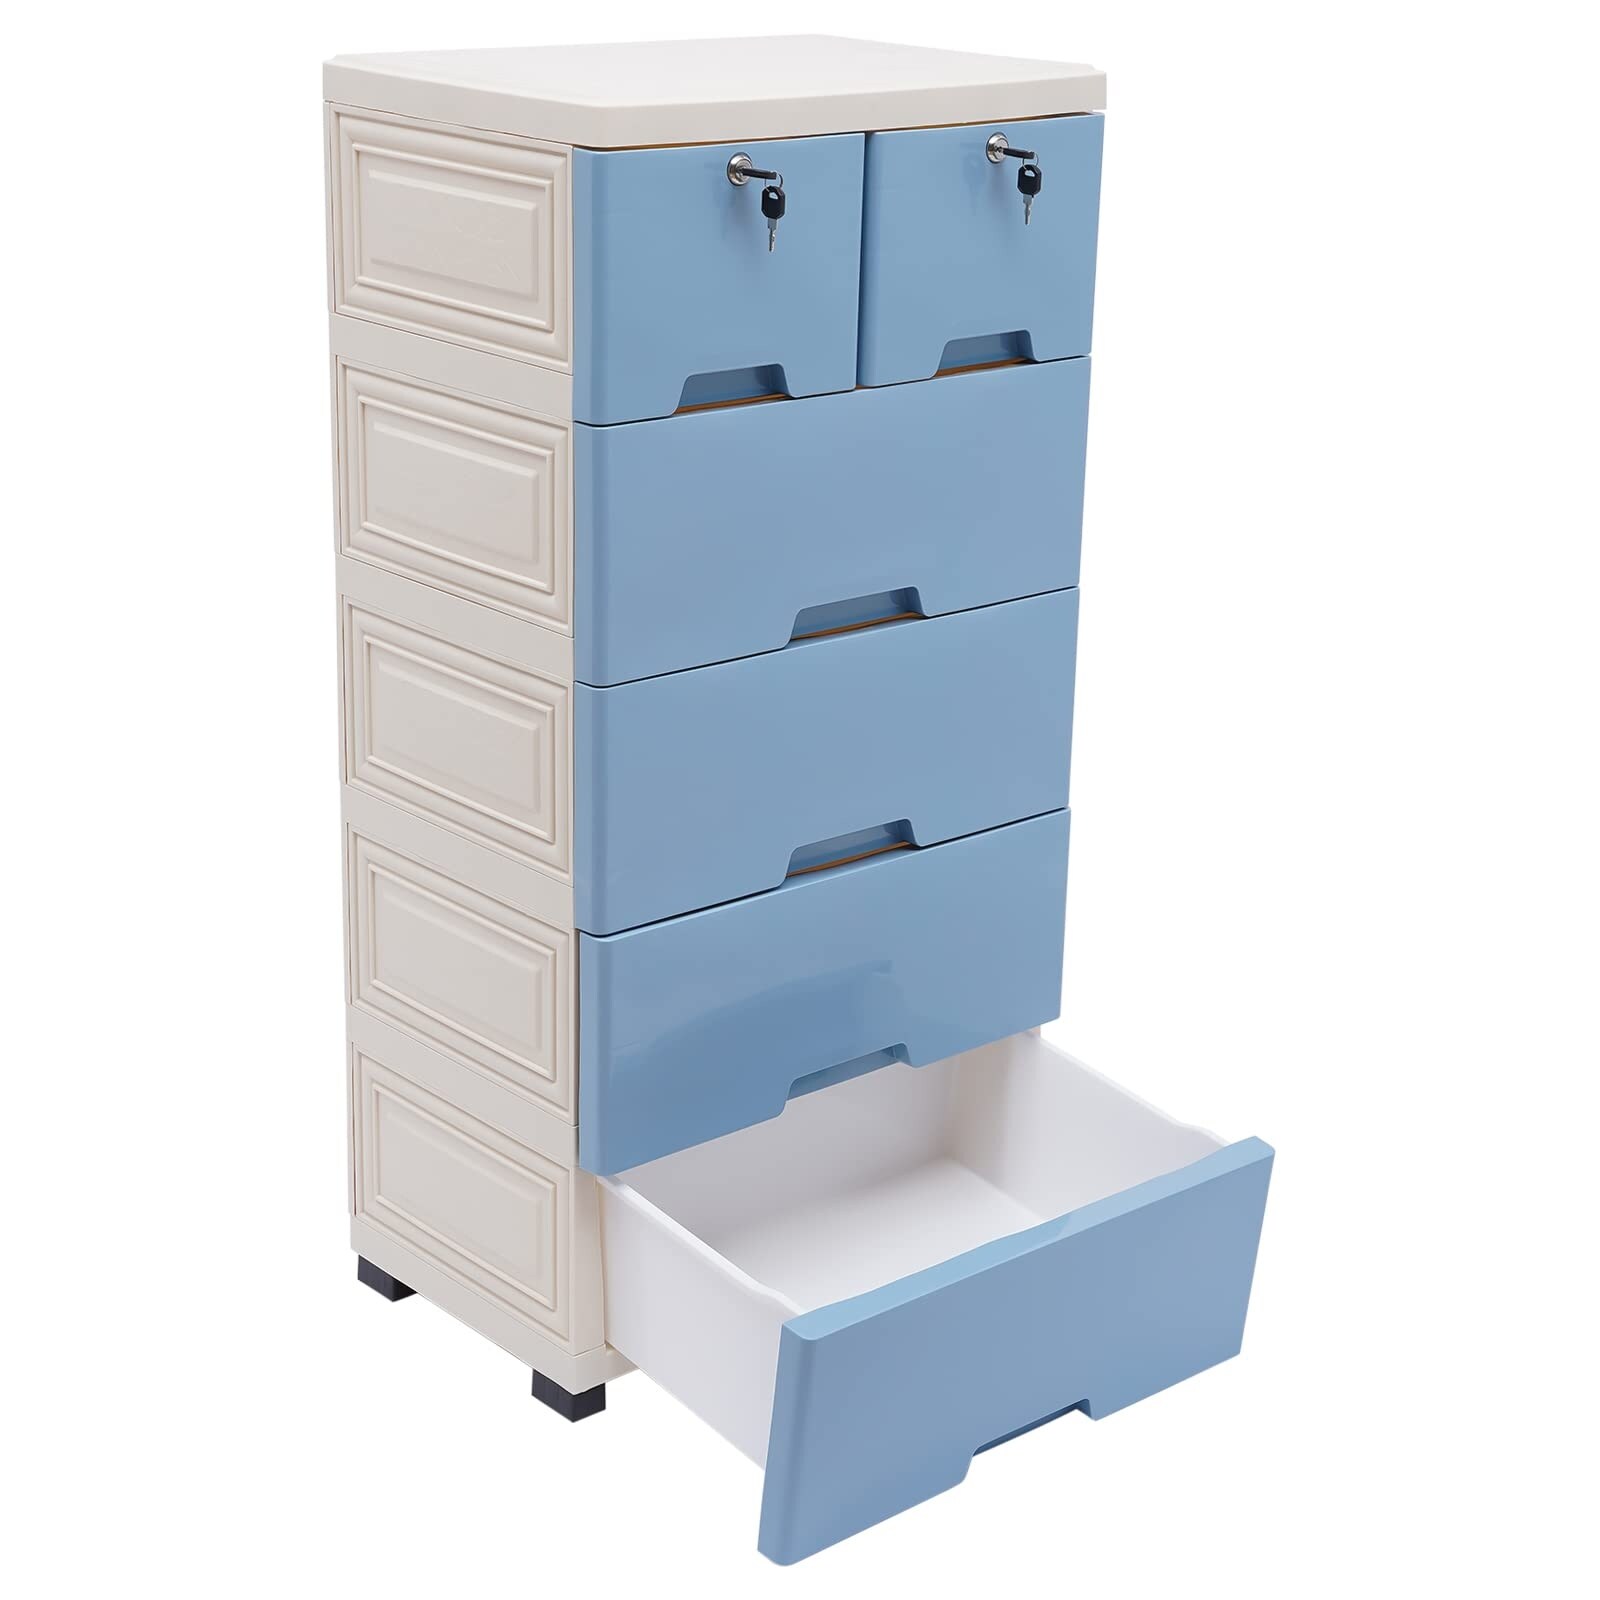 6 Closet Drawers Organizer Storage Plastic Cabinet Dresser Clothes.